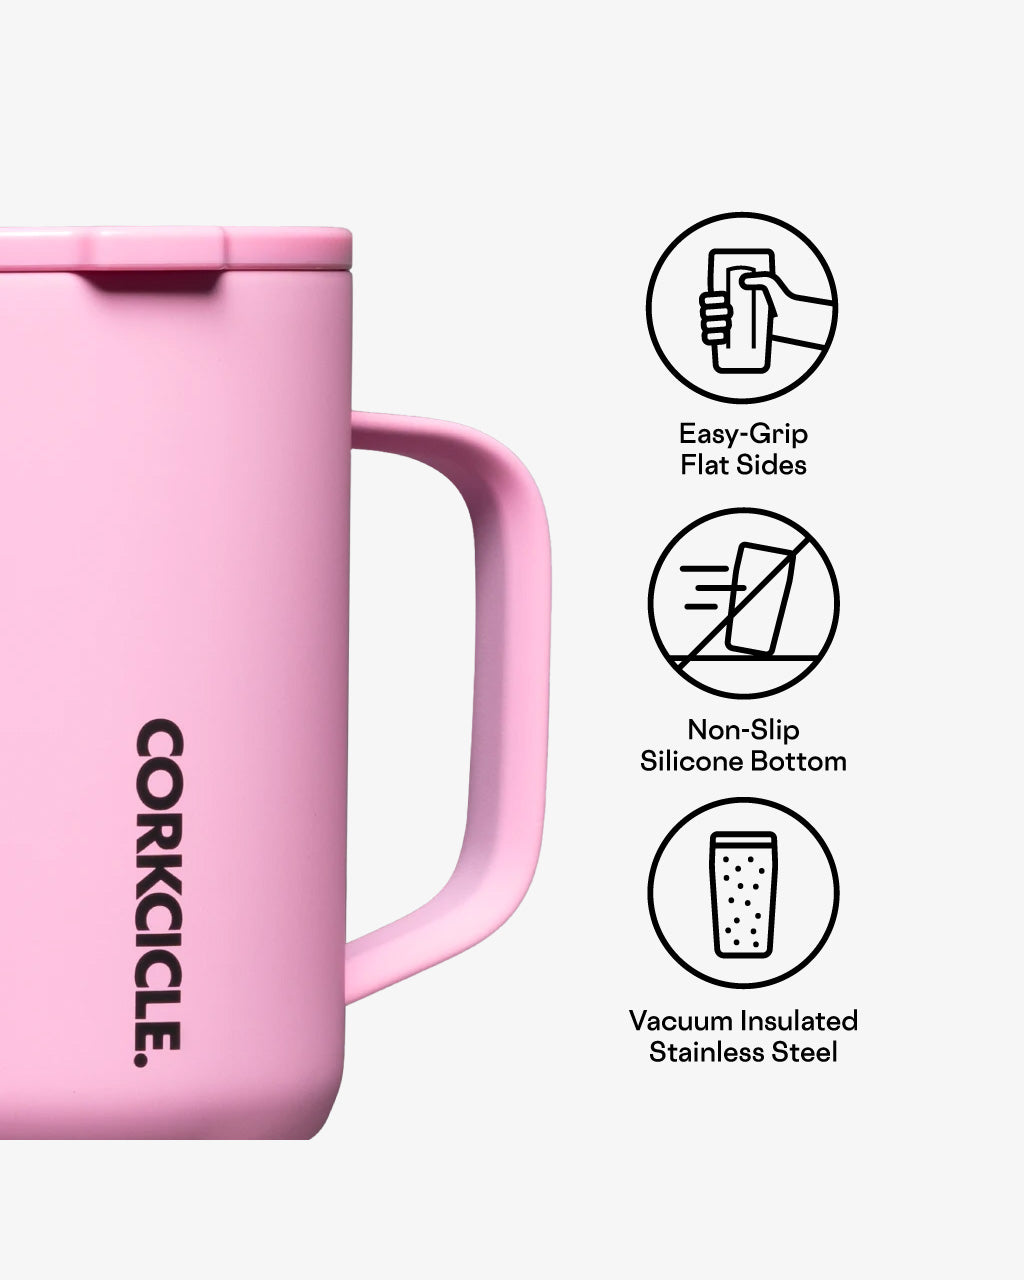 Corkcicle Coffee Mug - 16 oz White